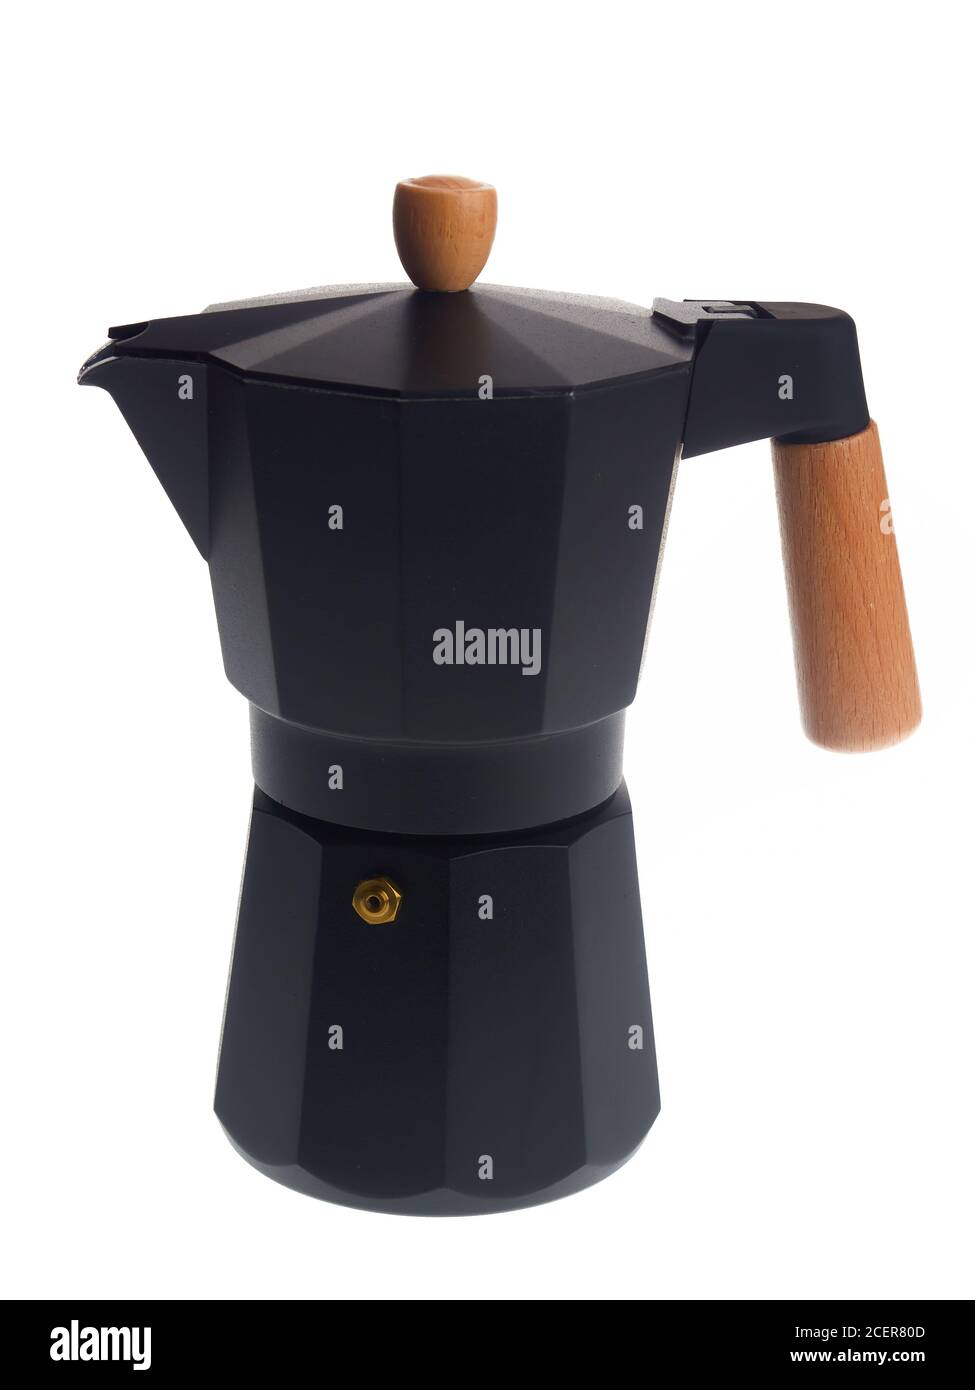 https://c8.alamy.com/comp/2CER80D/black-aluminum-moka-pot-stove-top-coffee-maker-isolated-on-white-background-2CER80D.jpg